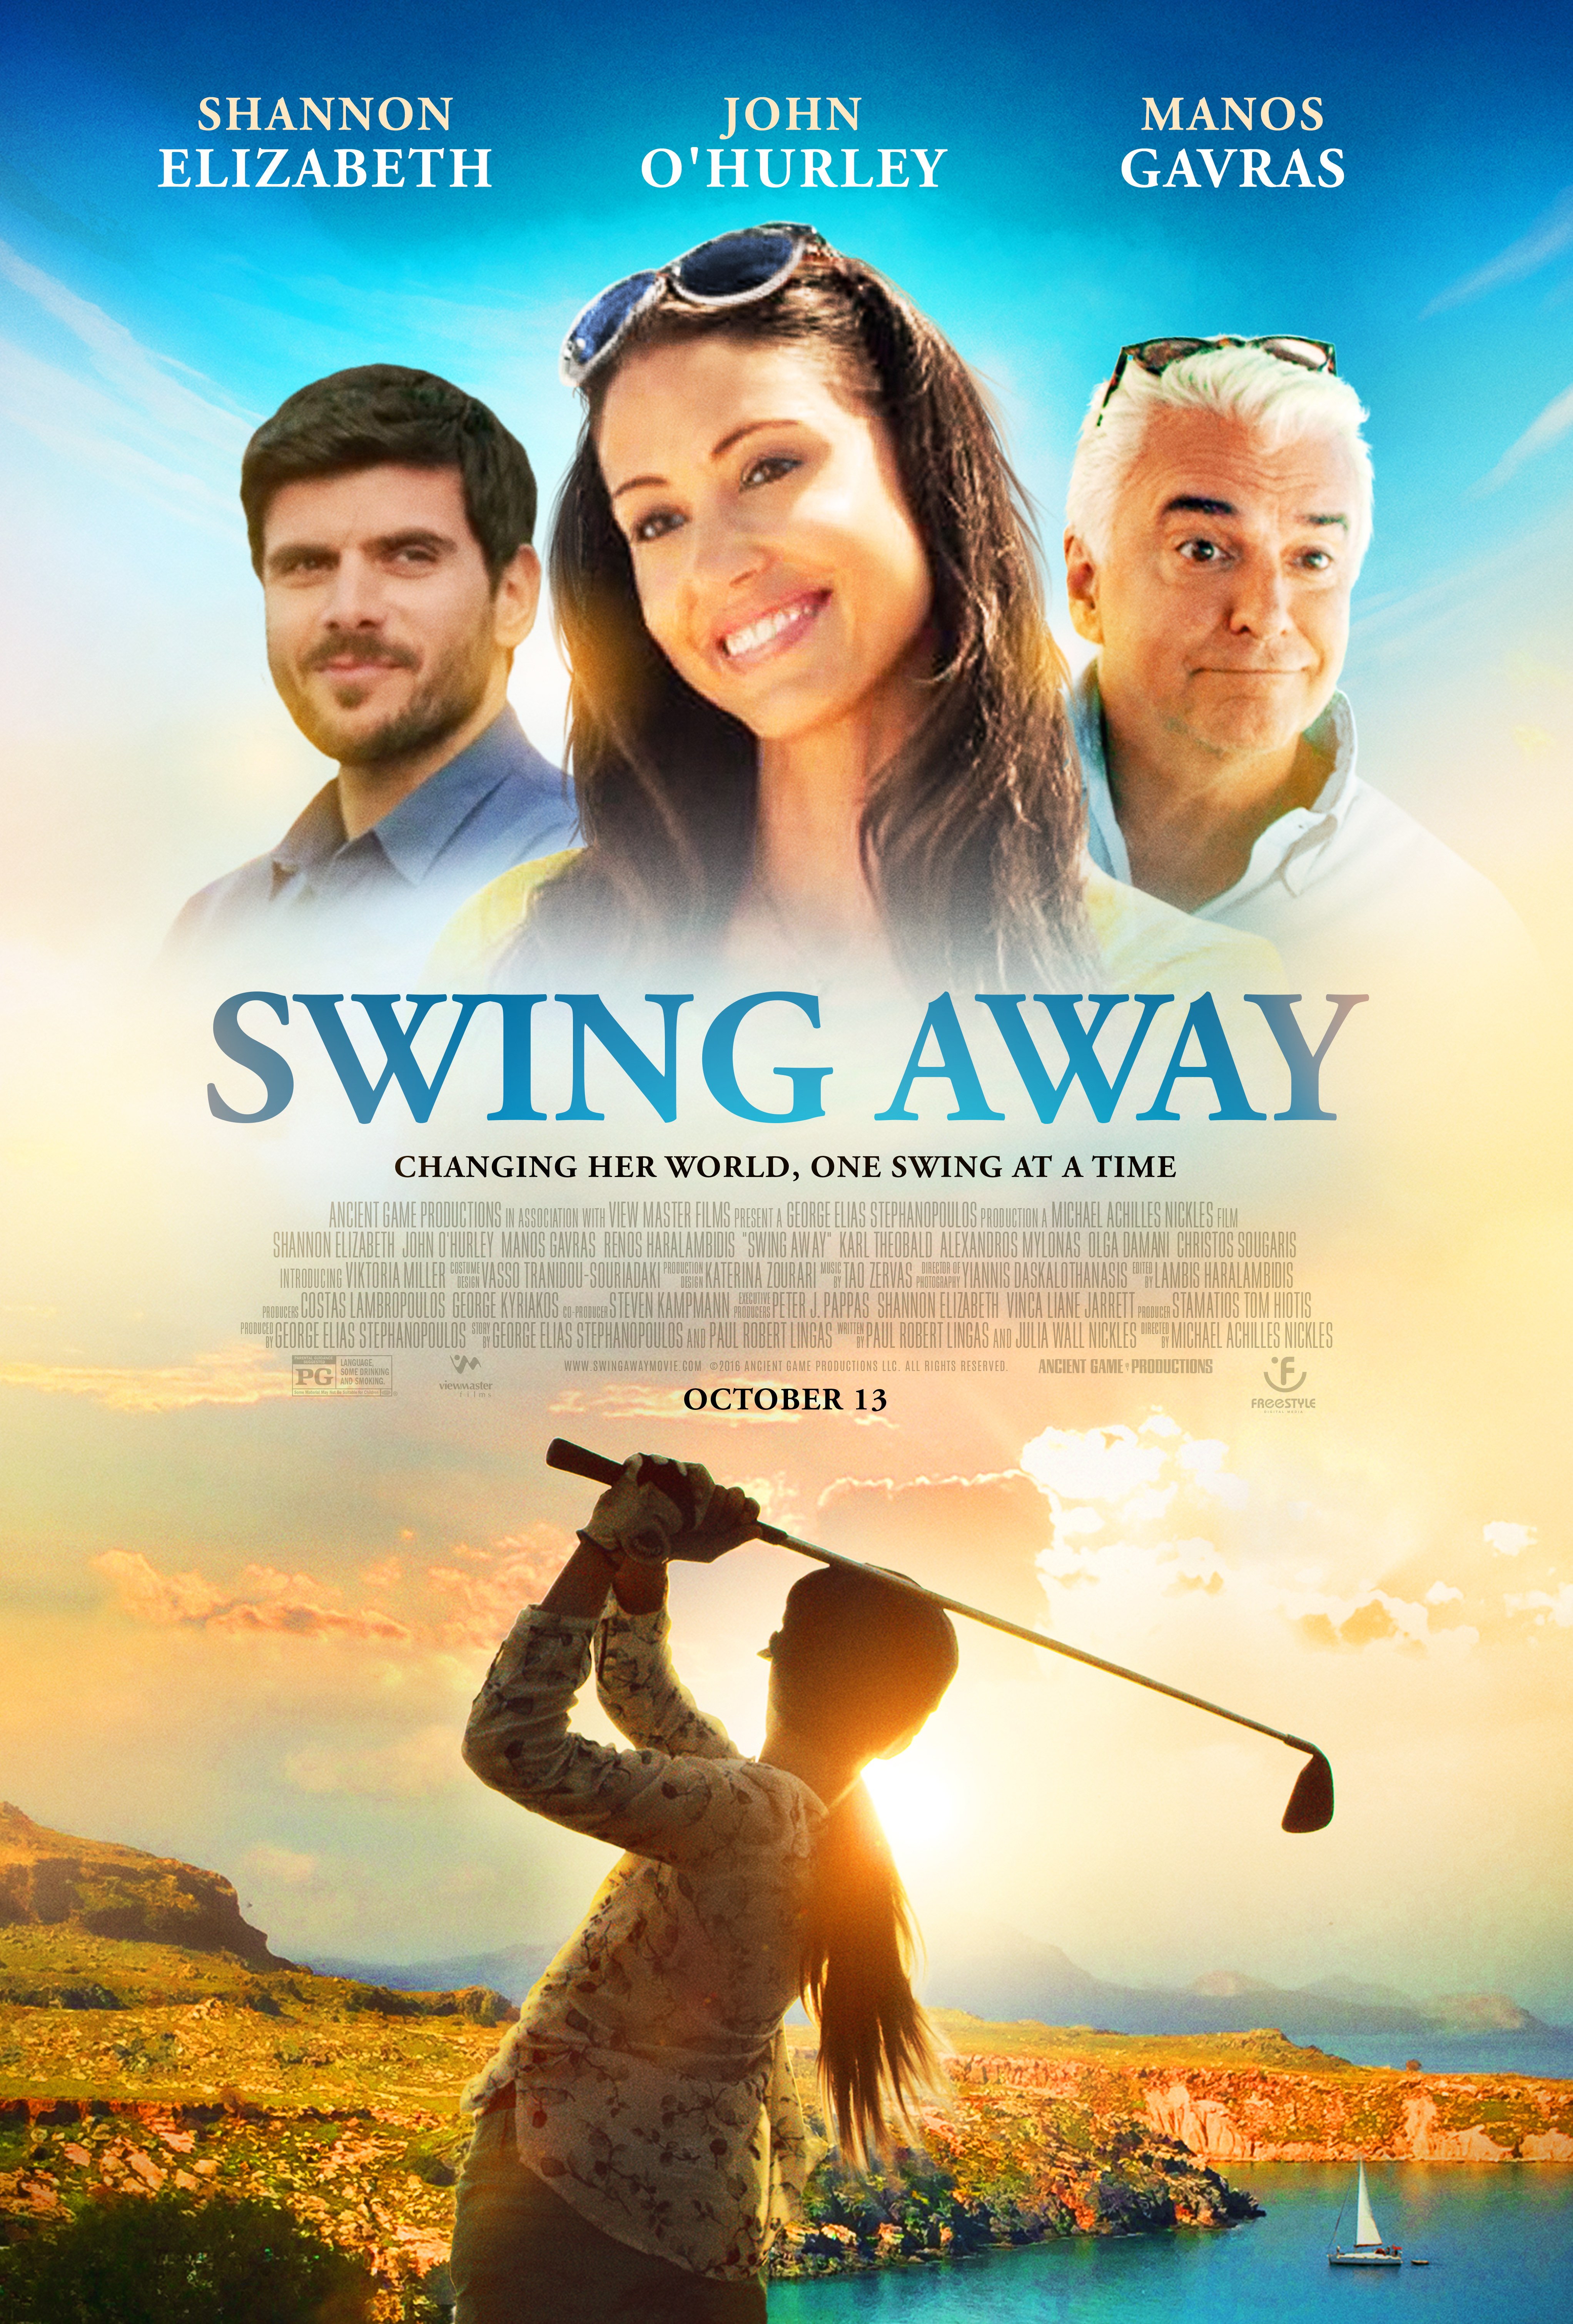 Nonton film Swing Away layarkaca21 indoxx1 ganool online streaming terbaru